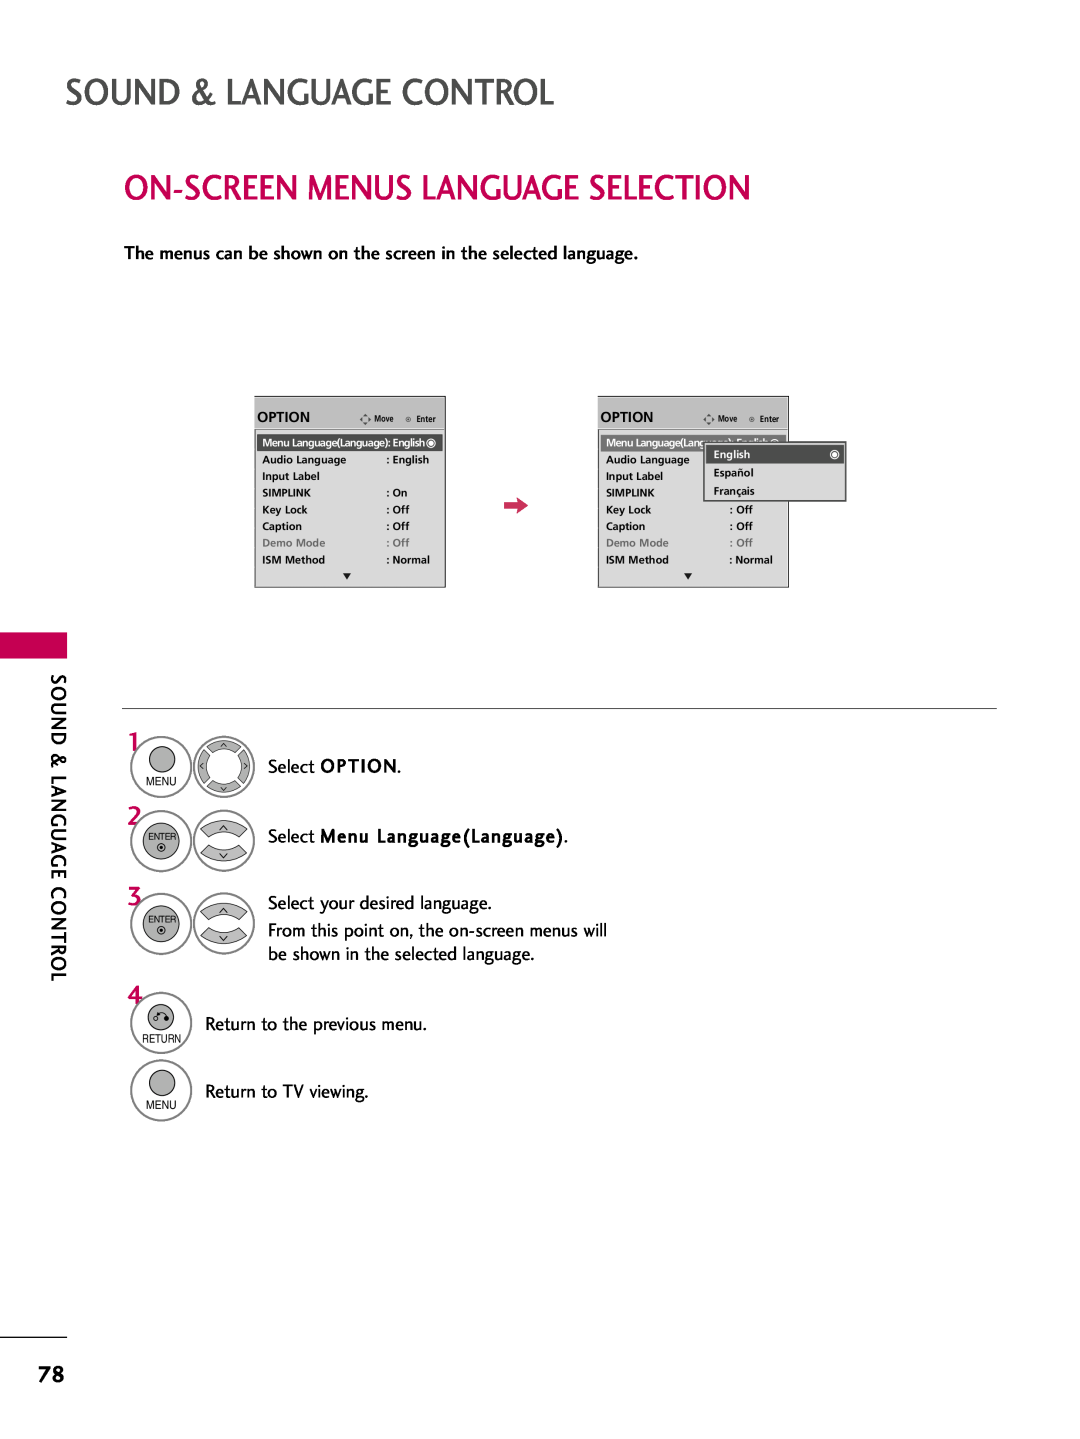 LG Electronics 42PQ12, 50PQ12 owner manual On-Screen Menus Language Selection, Sound & Language Control 